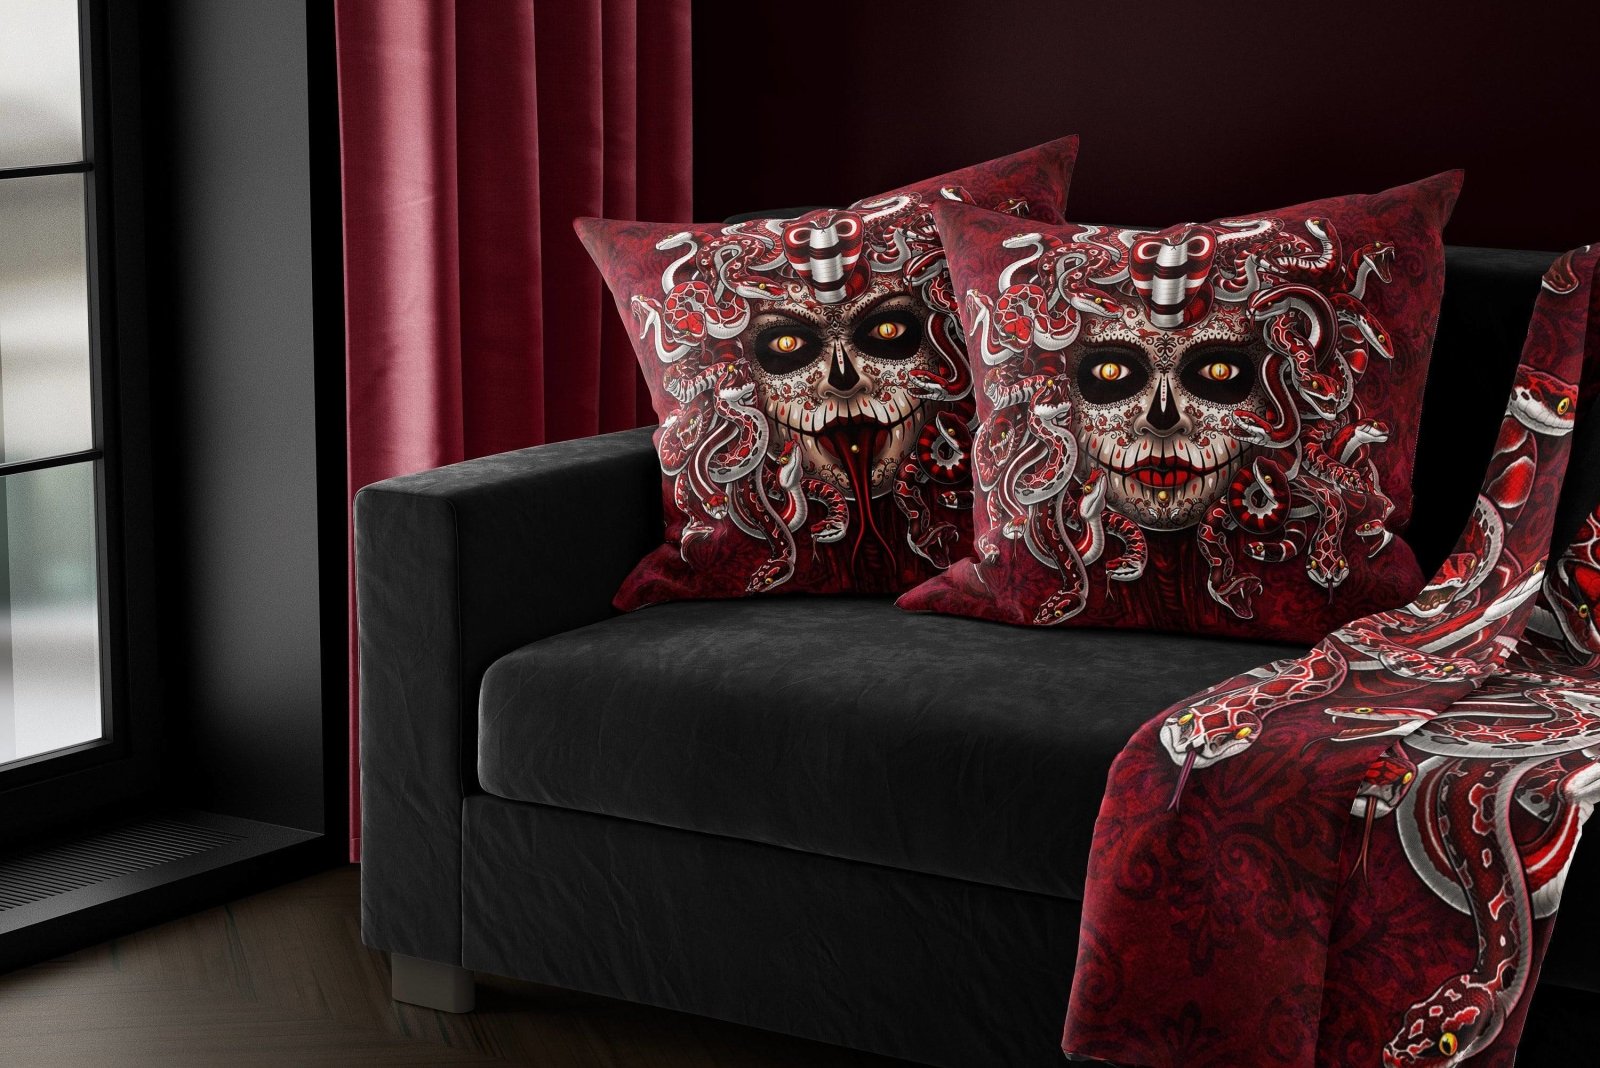 Catrina Throw Pillow, Decorative Accent Cushion, Medusa, Dia de los Muertos Decor, Day of the Dead, Mexican Art, Alternative Home - Mock, Red Snakes - Abysm Internal